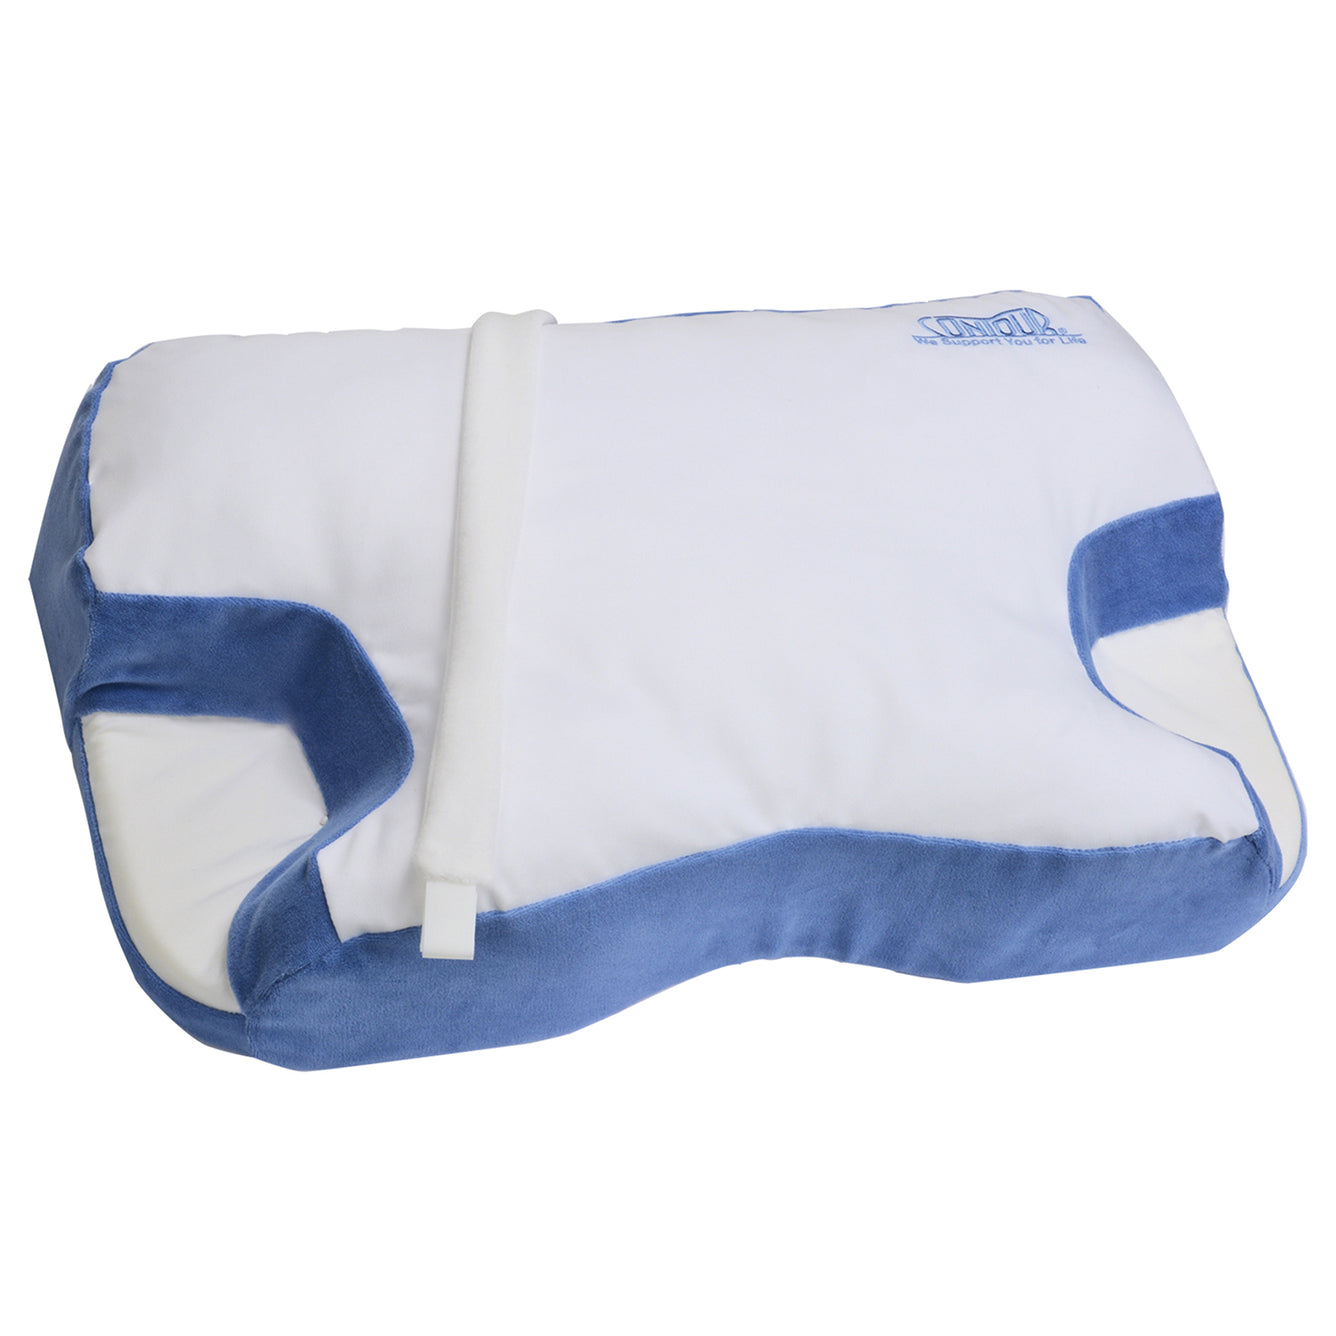 Contour CPAP Pillow